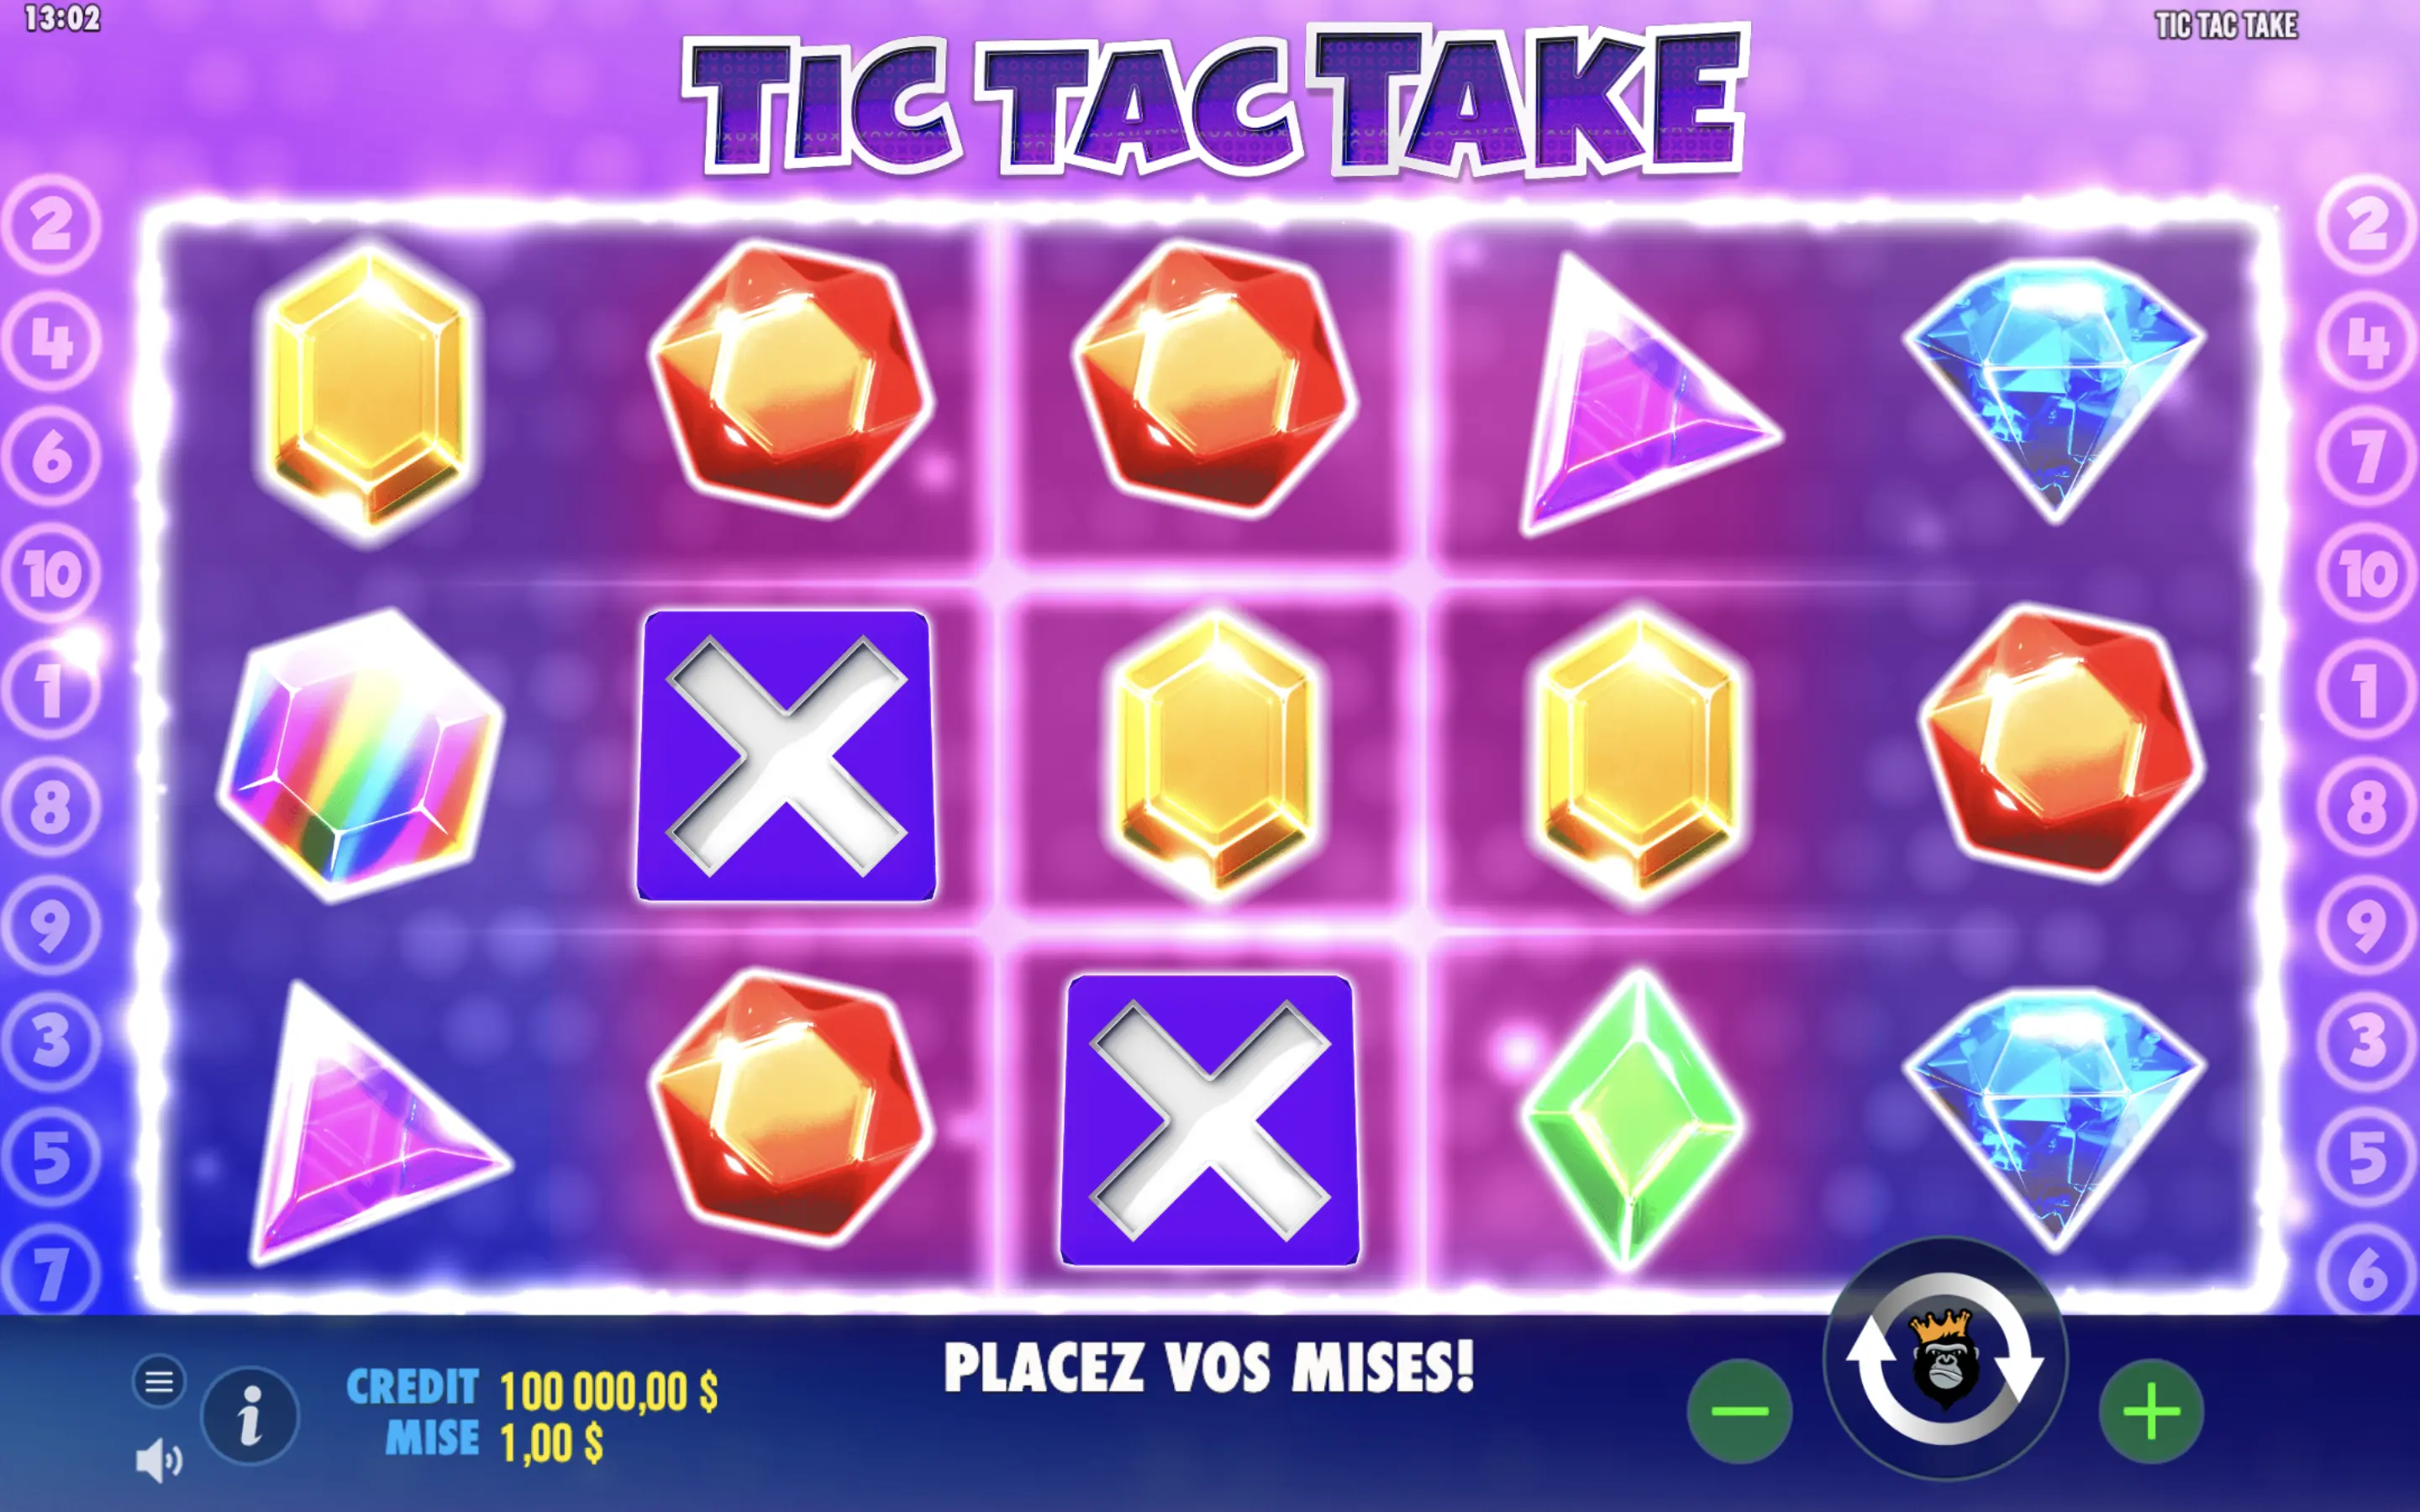 The Tic Tac Take slot machine by Pragmatic Play